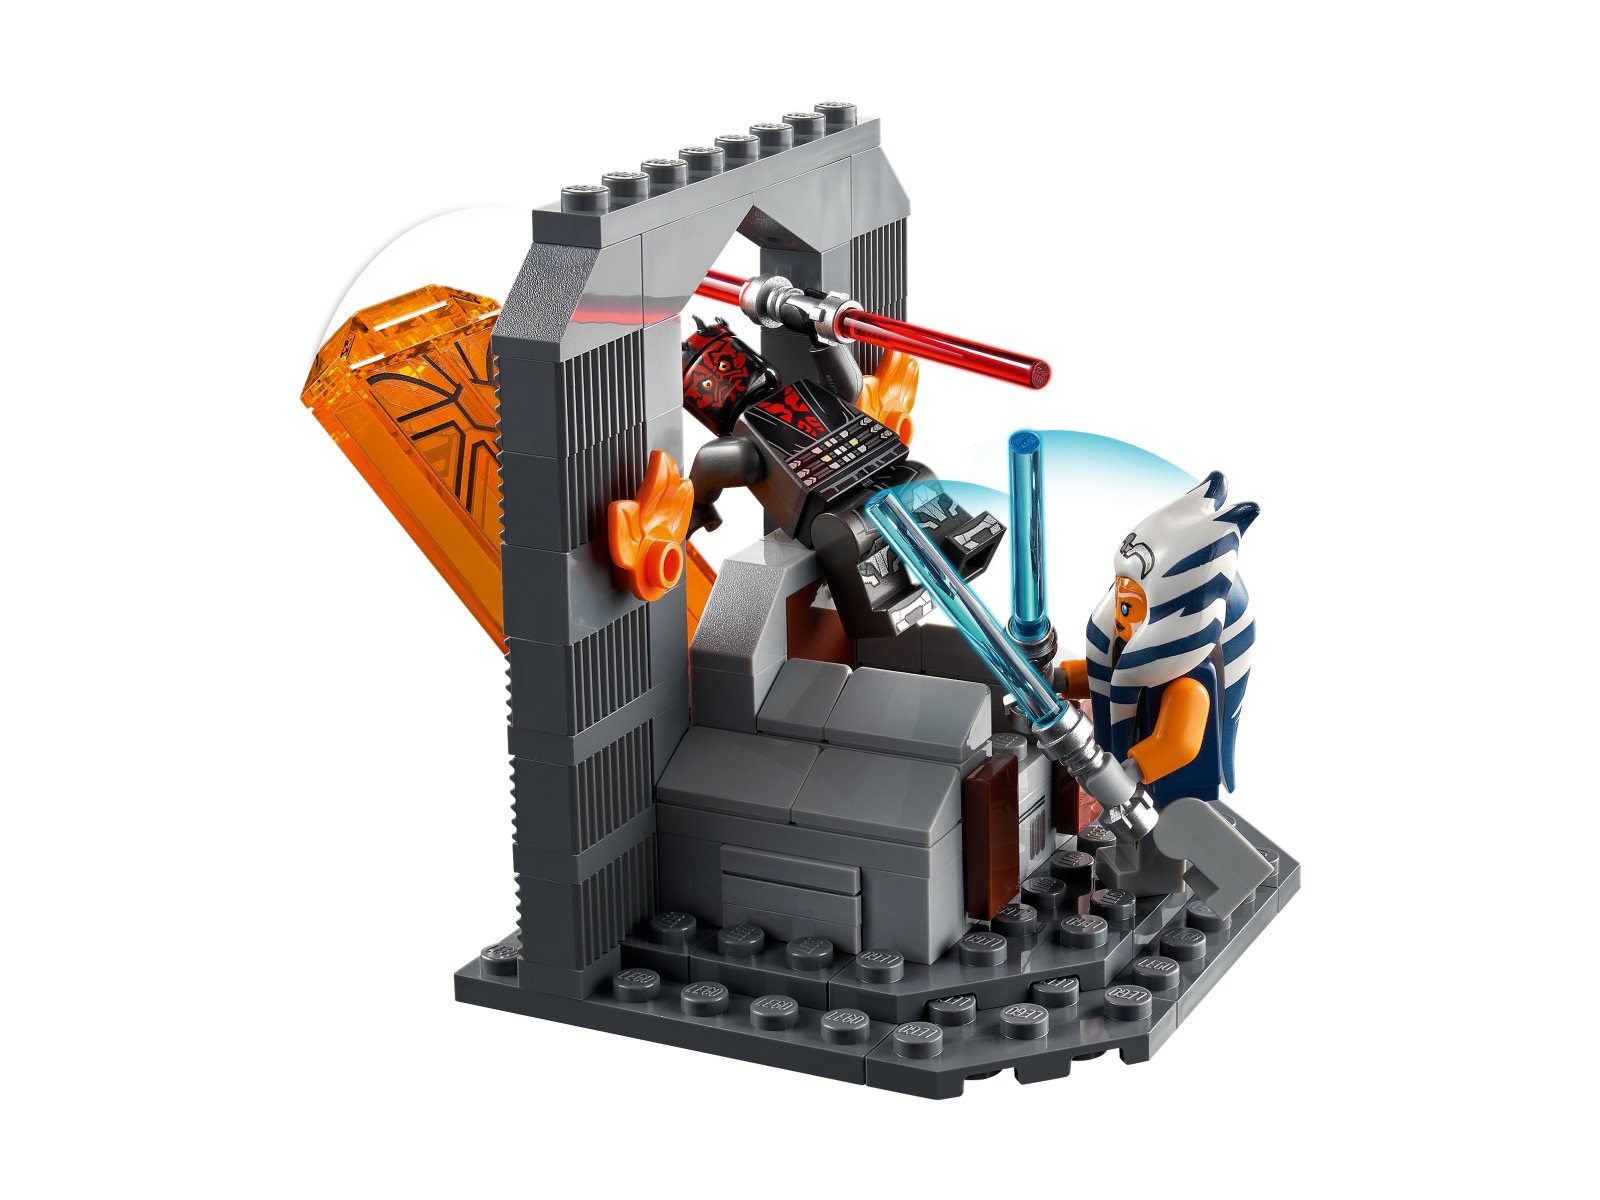 LEGO Star Wars Starcie na Mandalore™ 75310